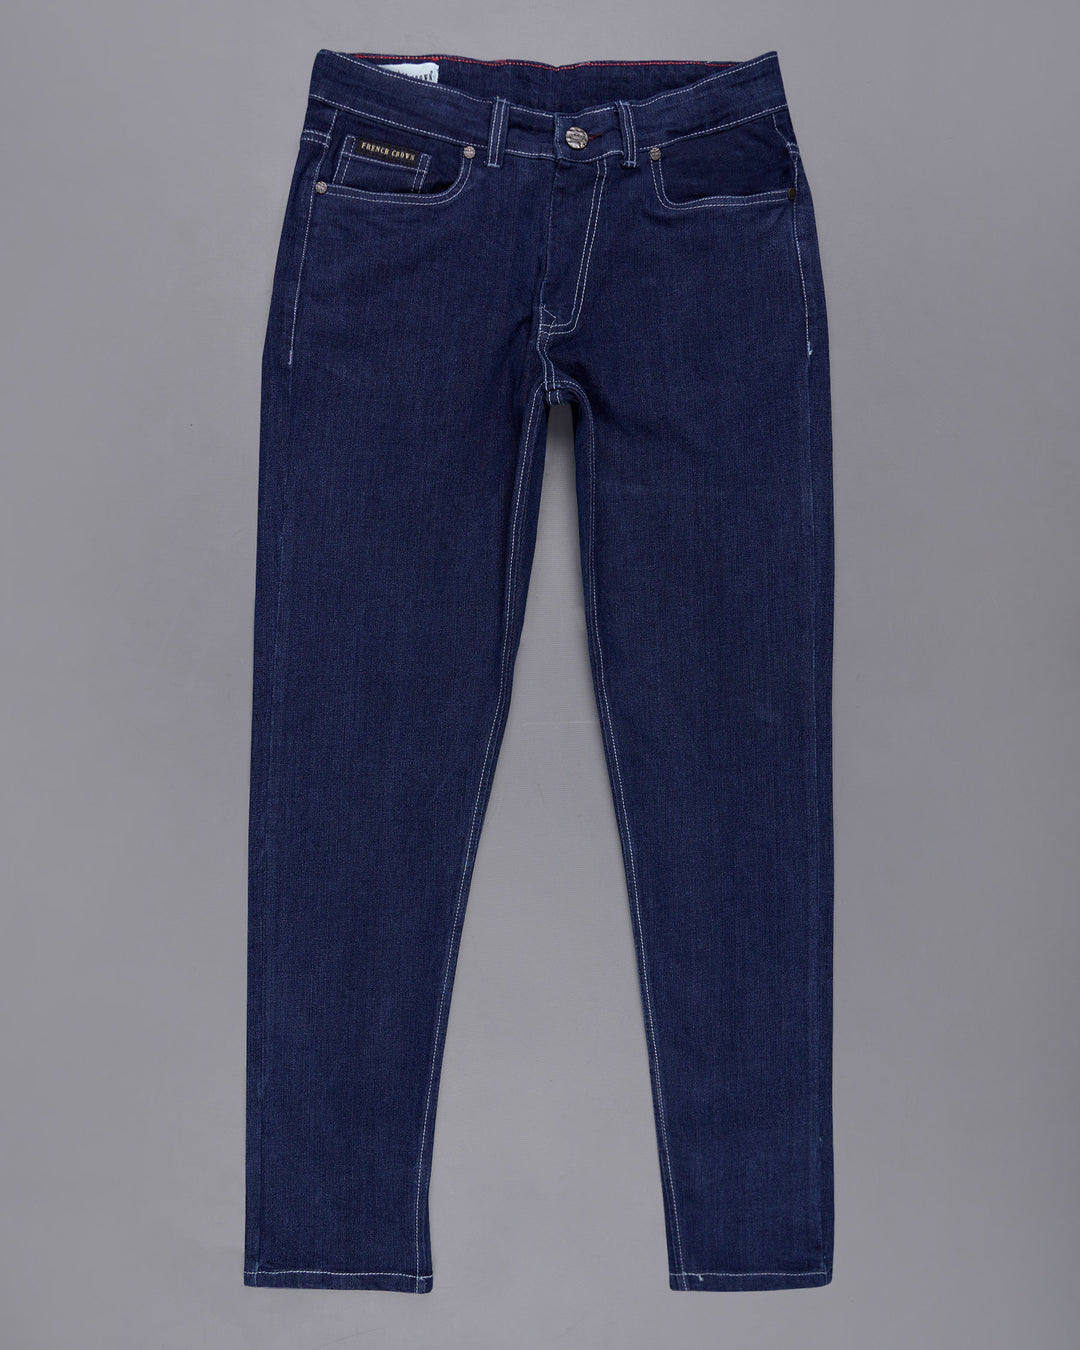 Blue Jeans Pants Shirts Combinations | Camisa jeans masculina, Blusa jeans  masculino, Jeans masculino